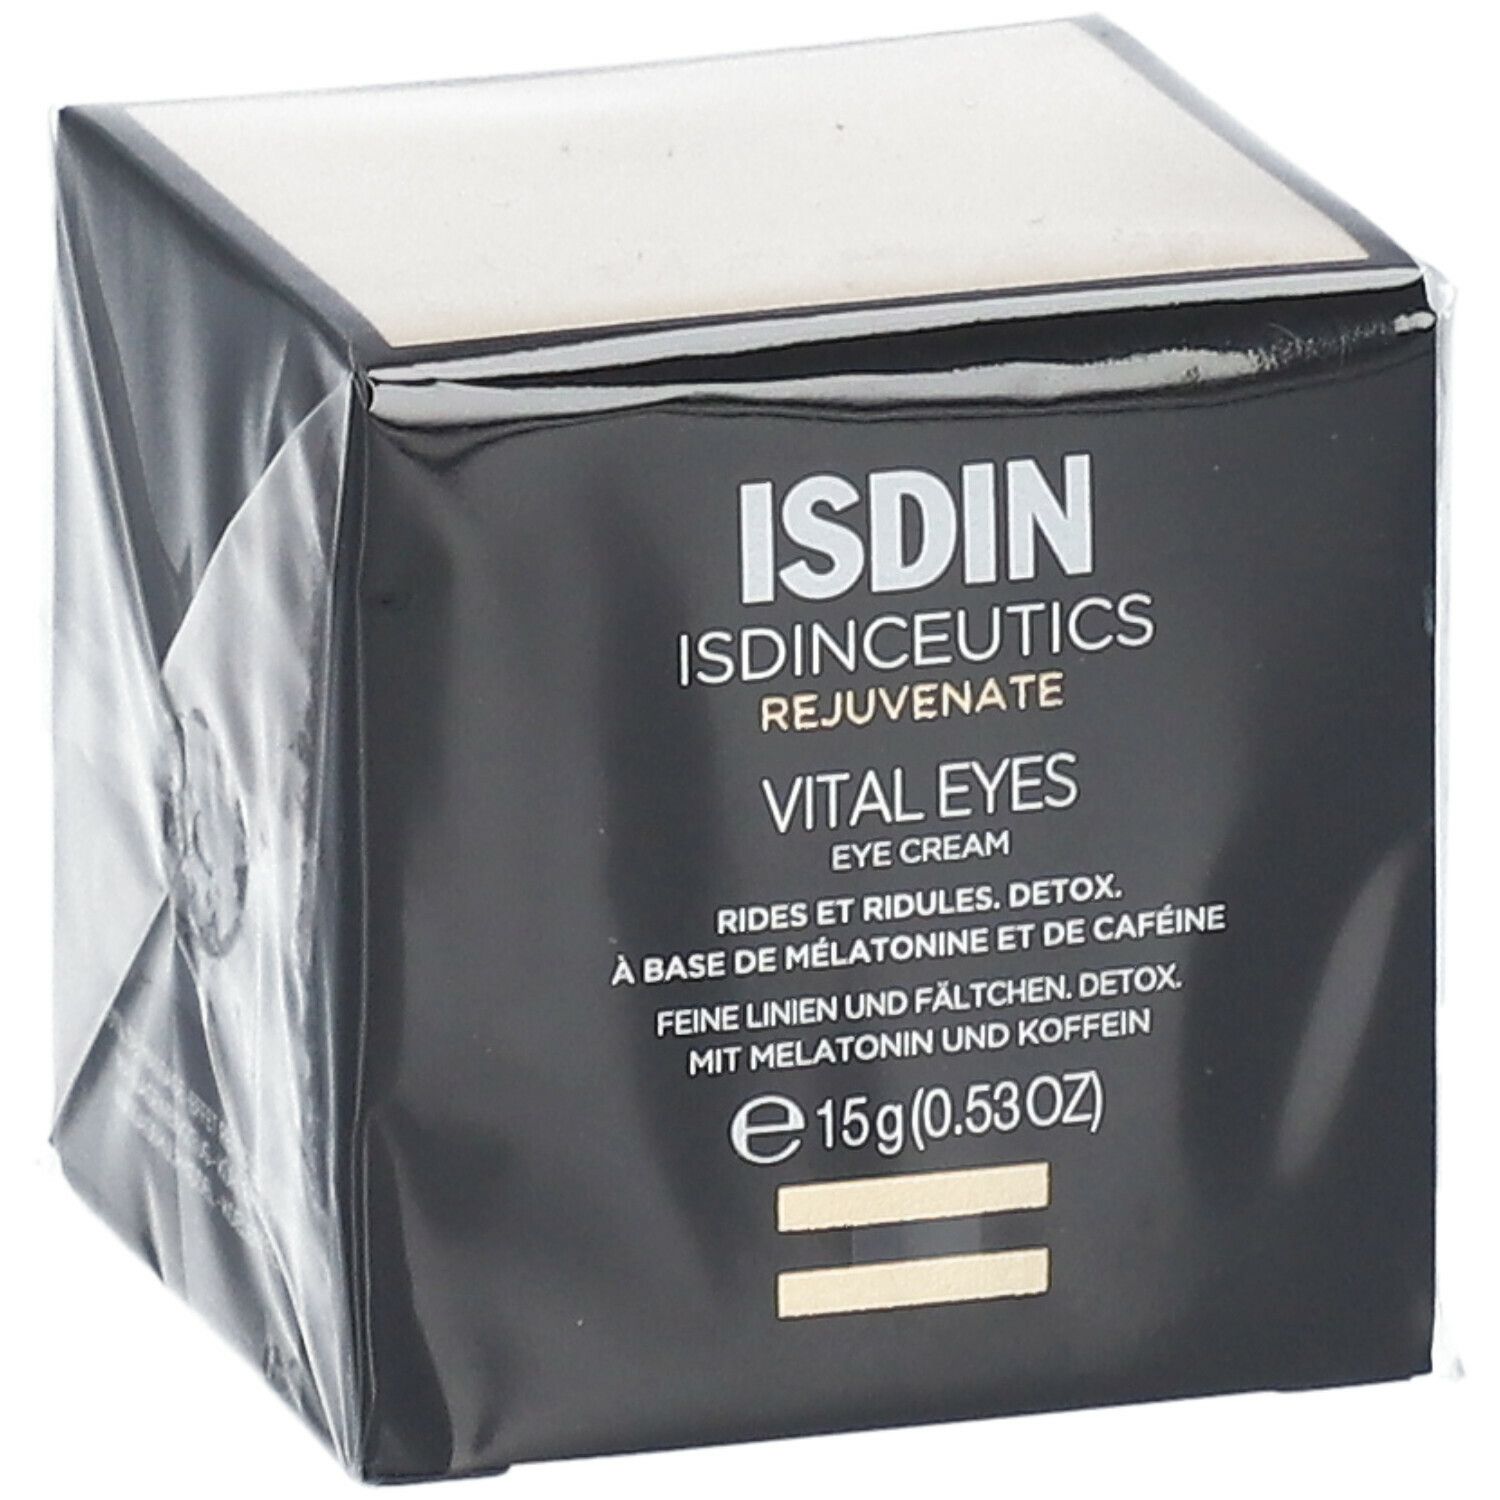 ISDIN® Isdinceutics Vital Eyes